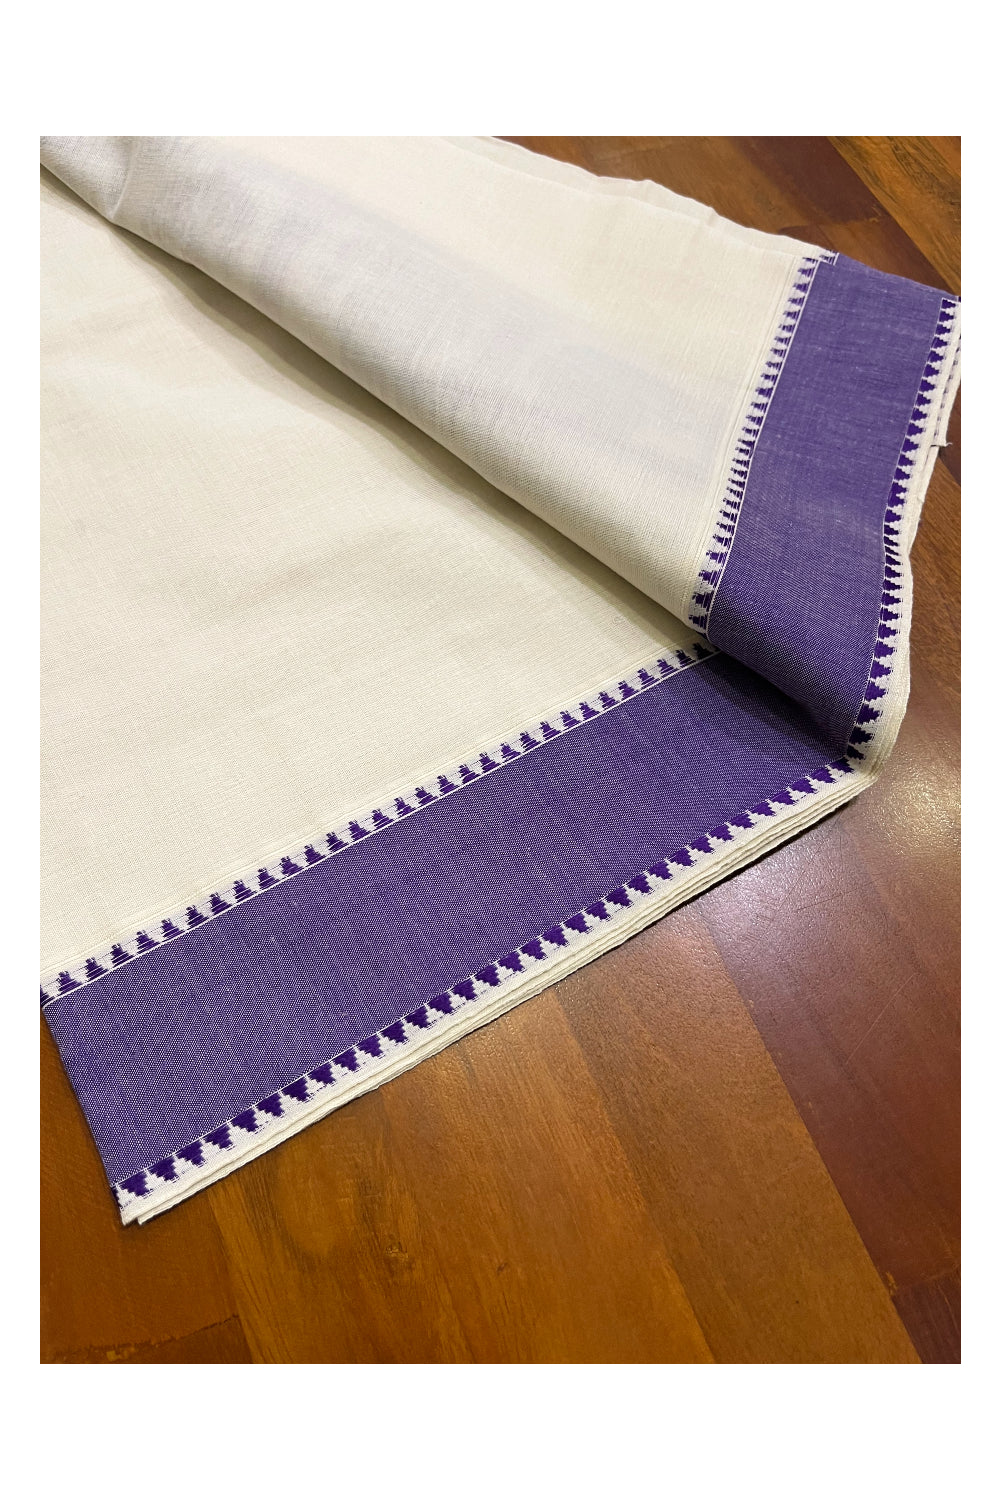 Kerala Cotton Single Set Mundu (Mundum Neriyathum) with Violet Woven Designs on Border - 2.80Mtrs